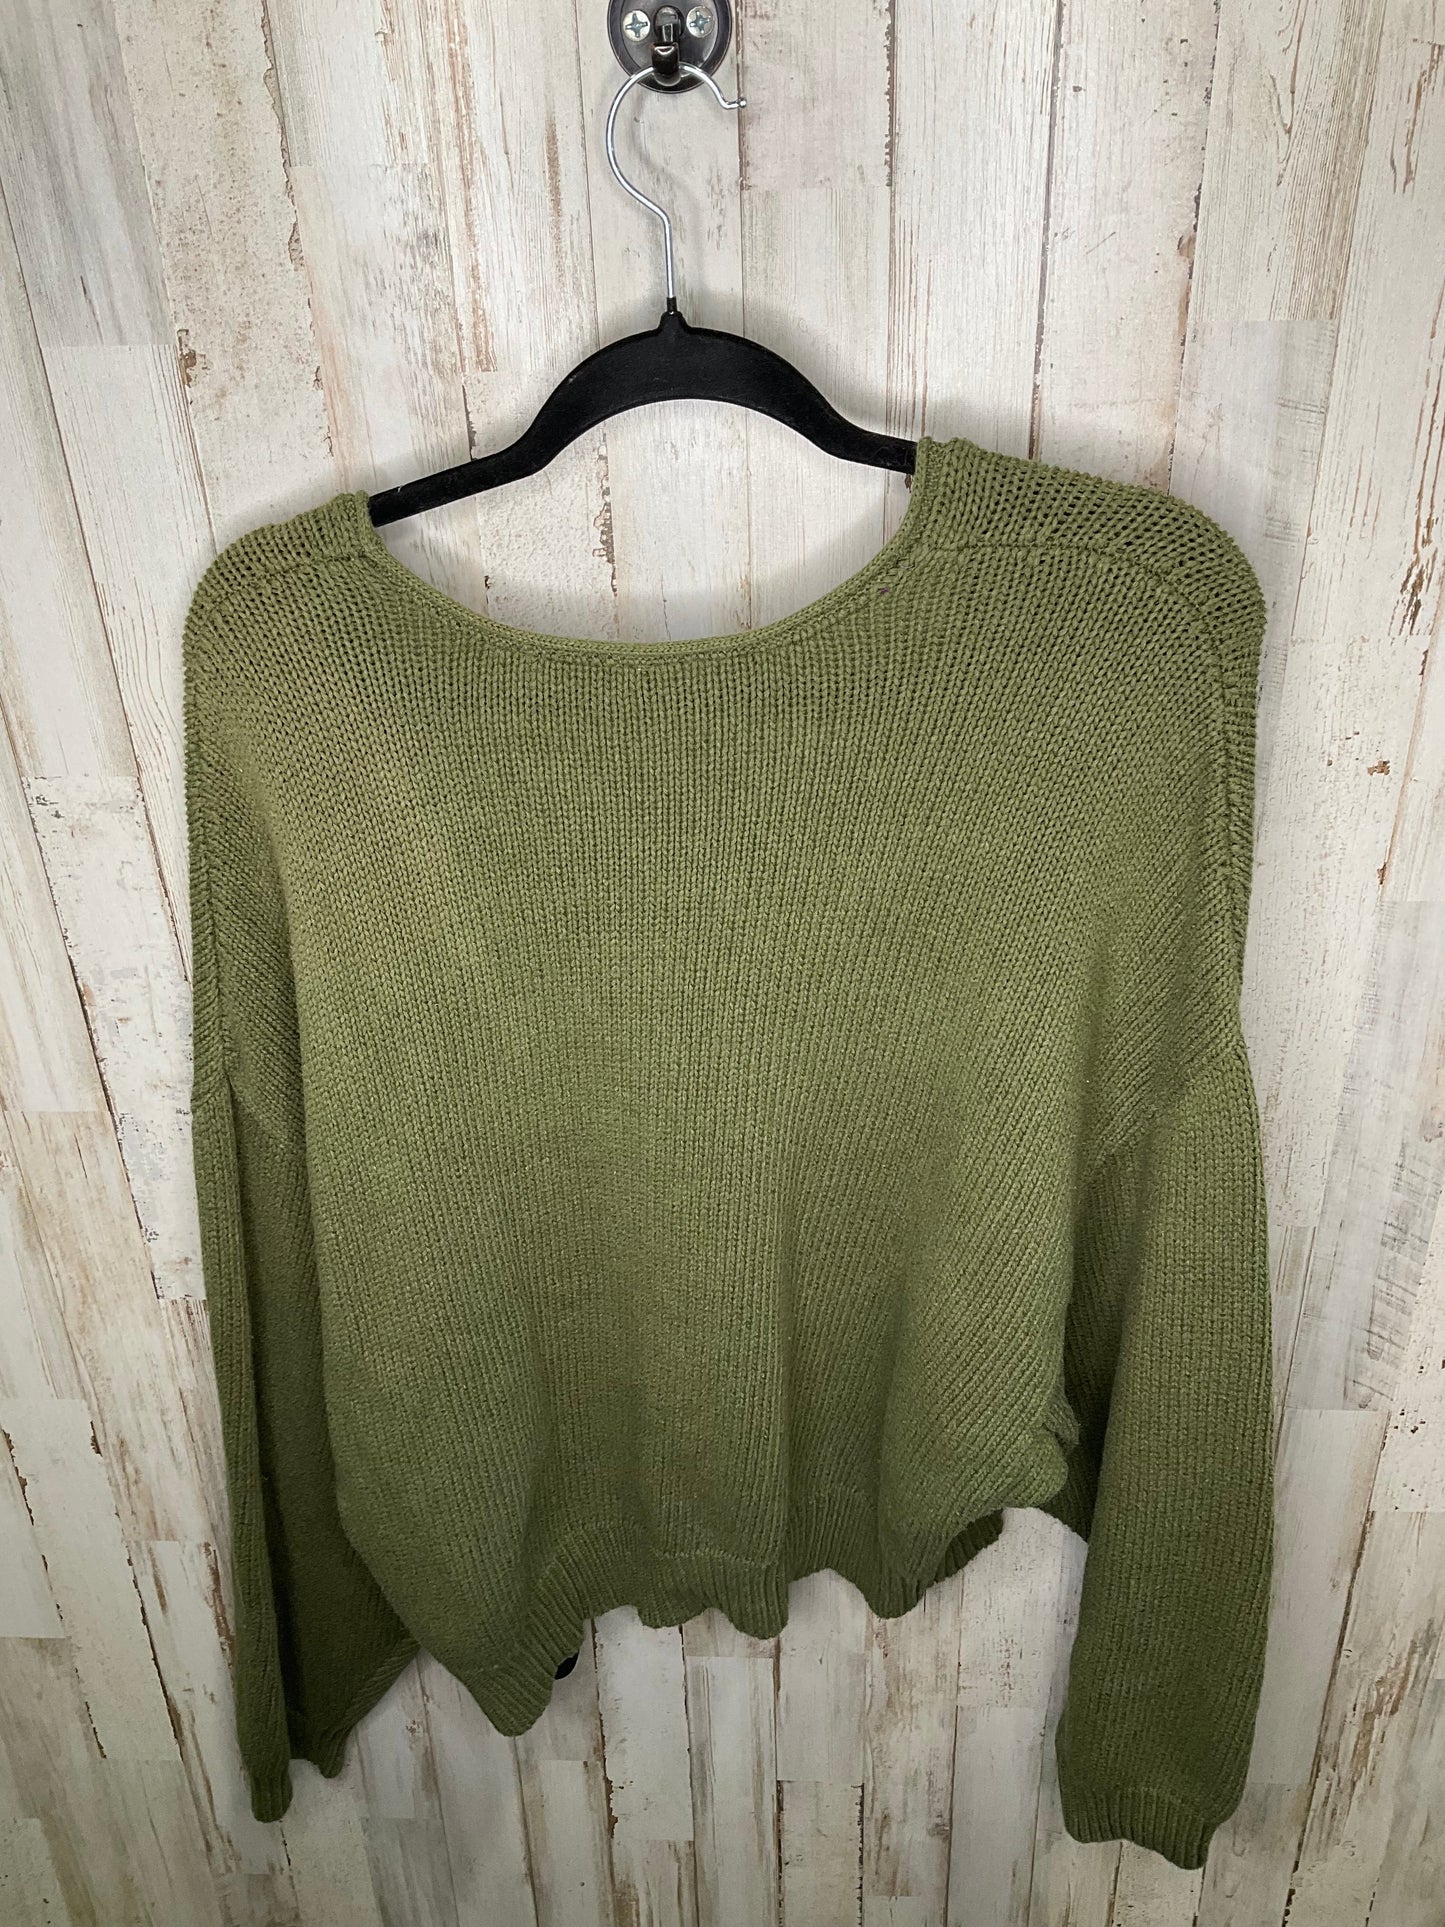 Green Sweater Free People, Size M